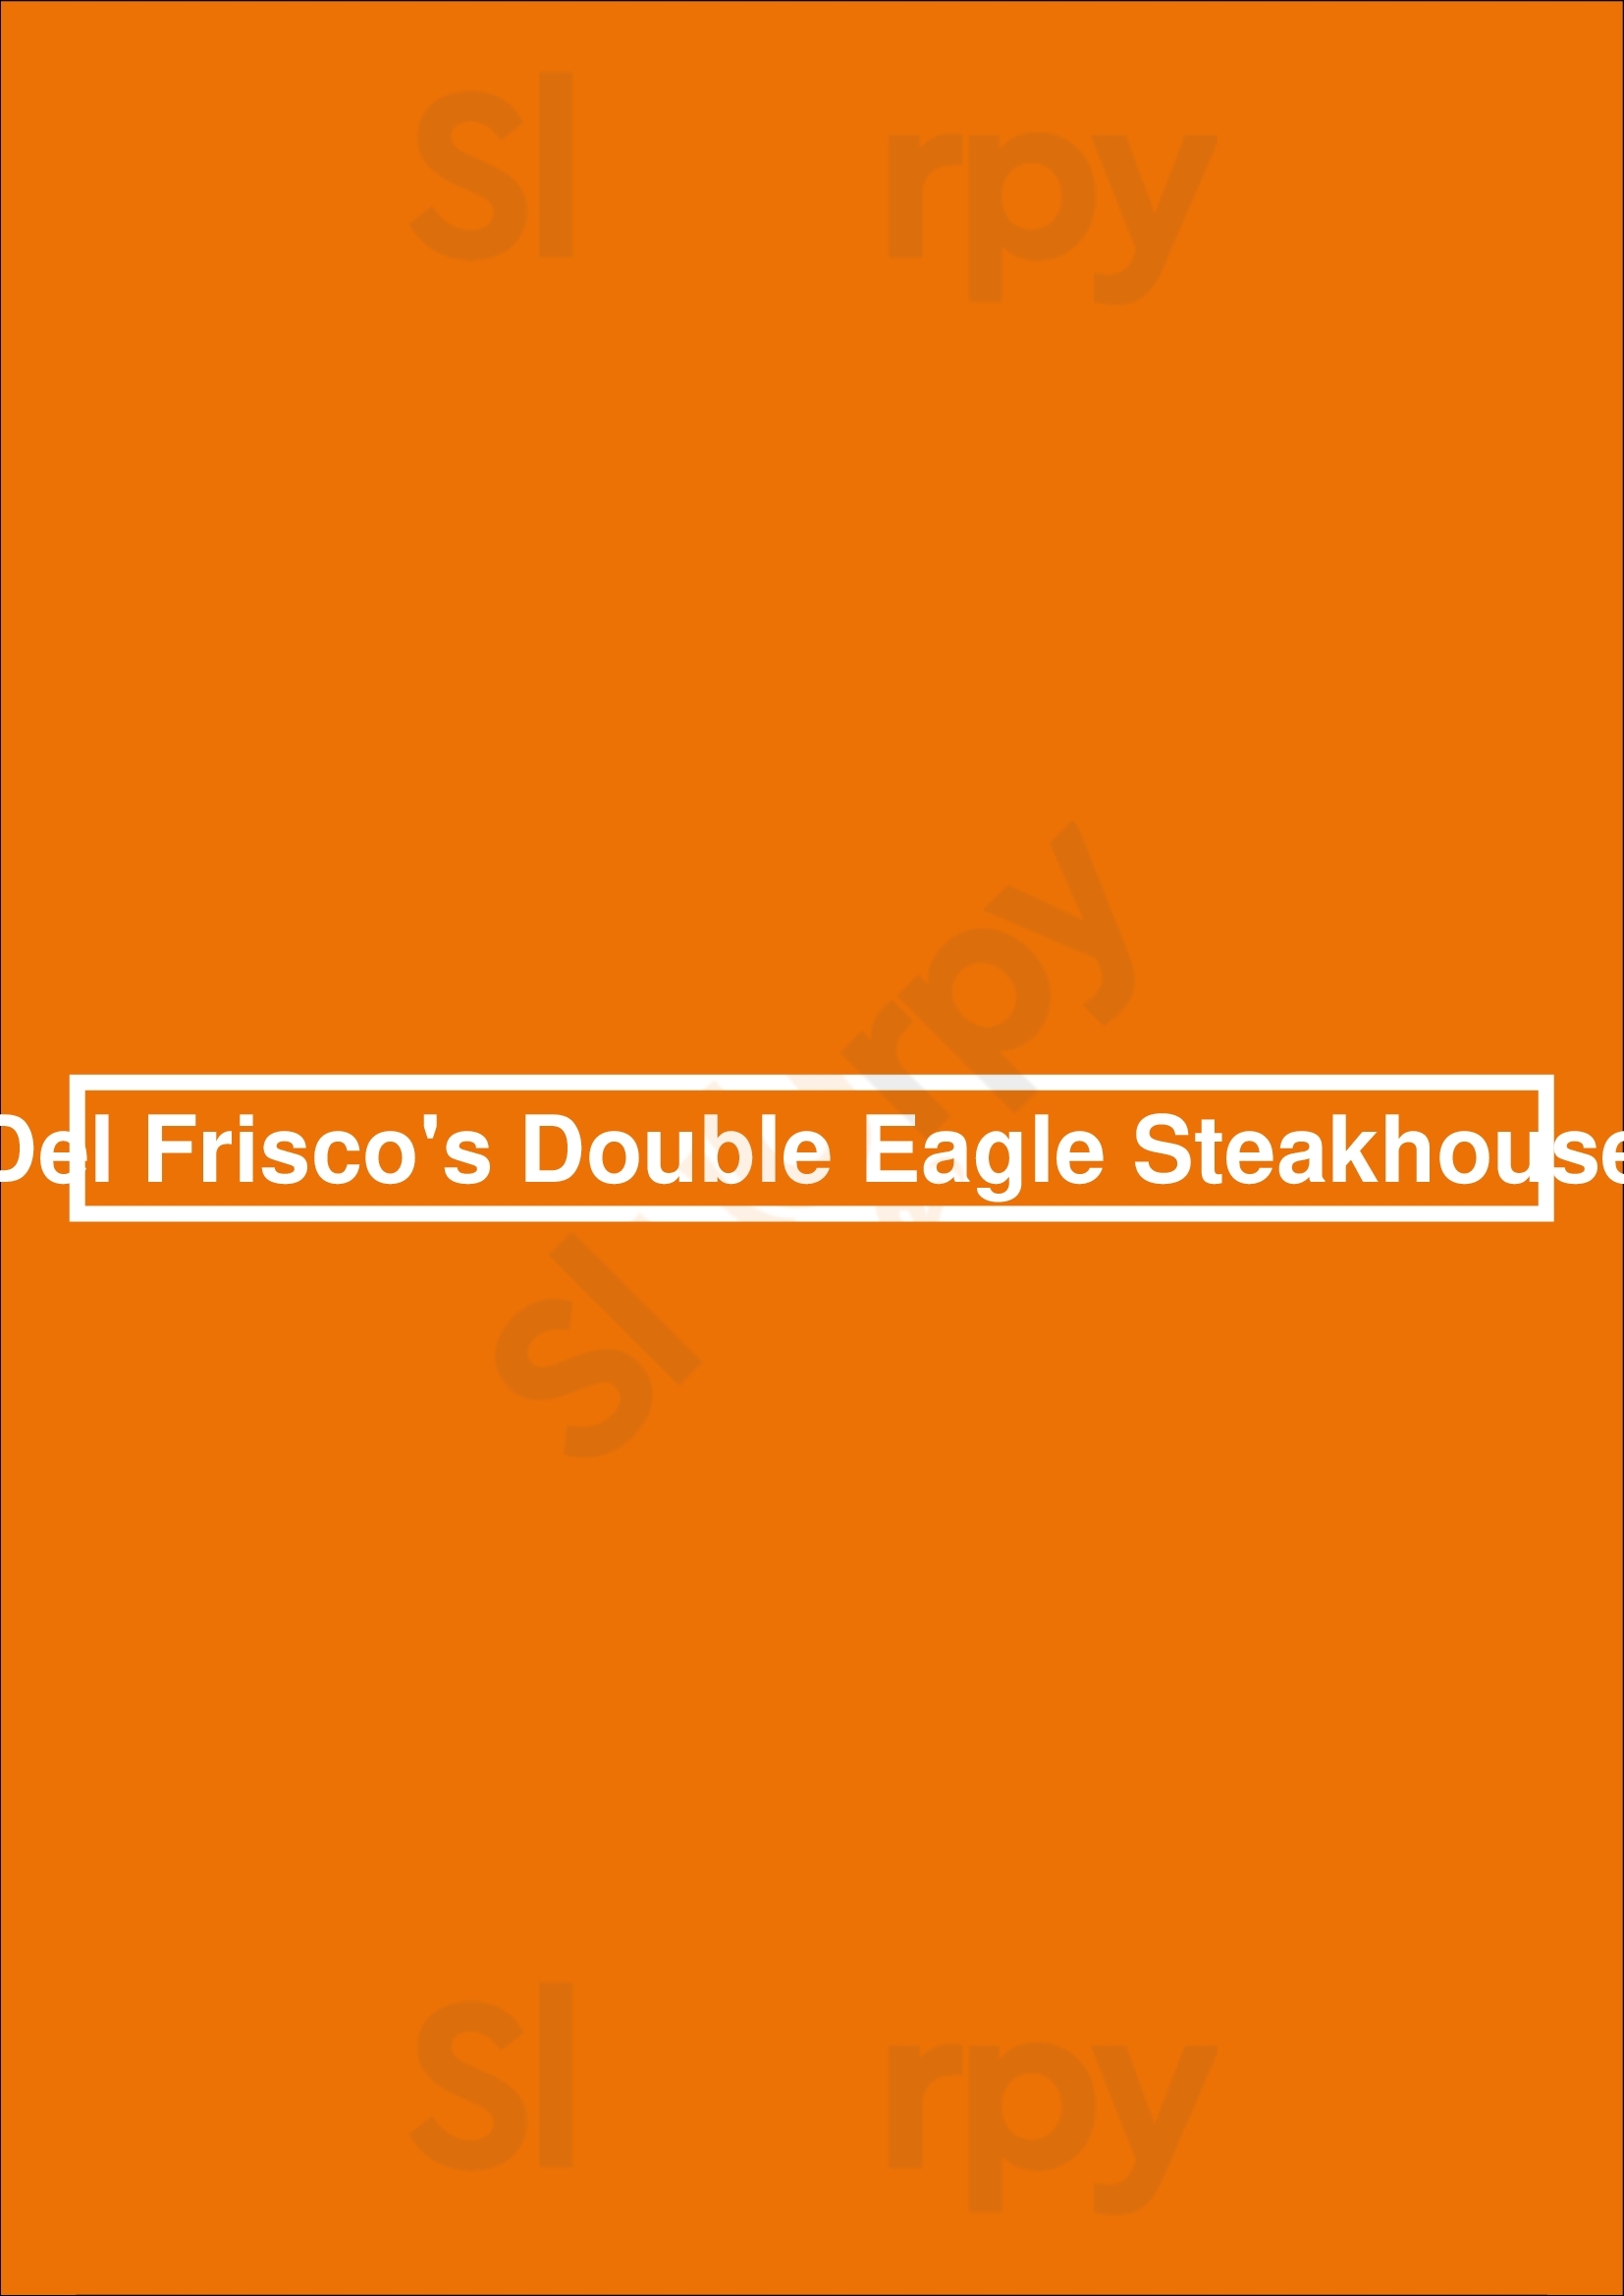 Del Frisco's Double Eagle Steakhouse Orlando Menu - 1